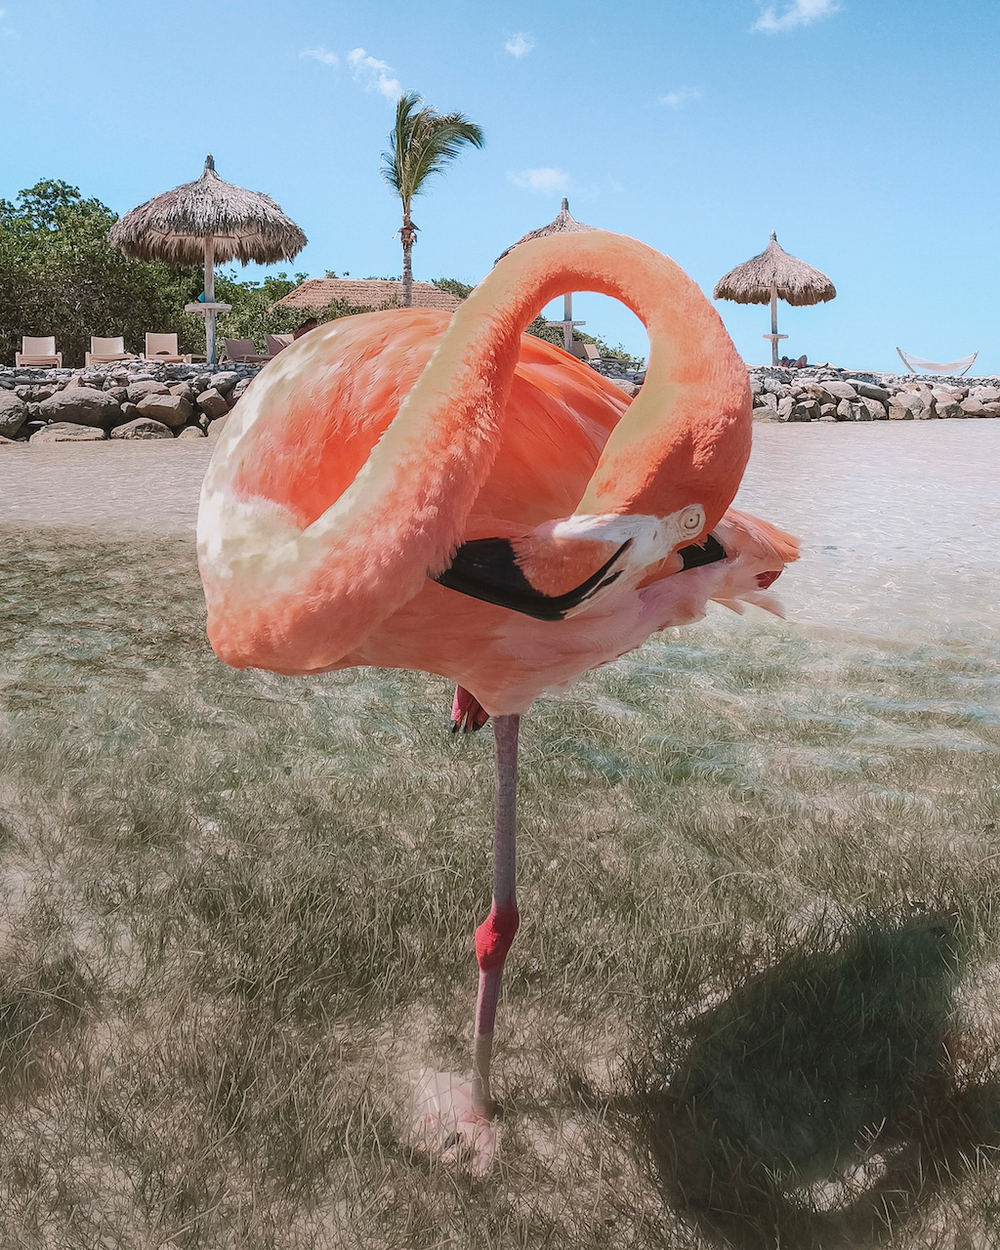 Flamingo upside down - Aruba - ABC Islands